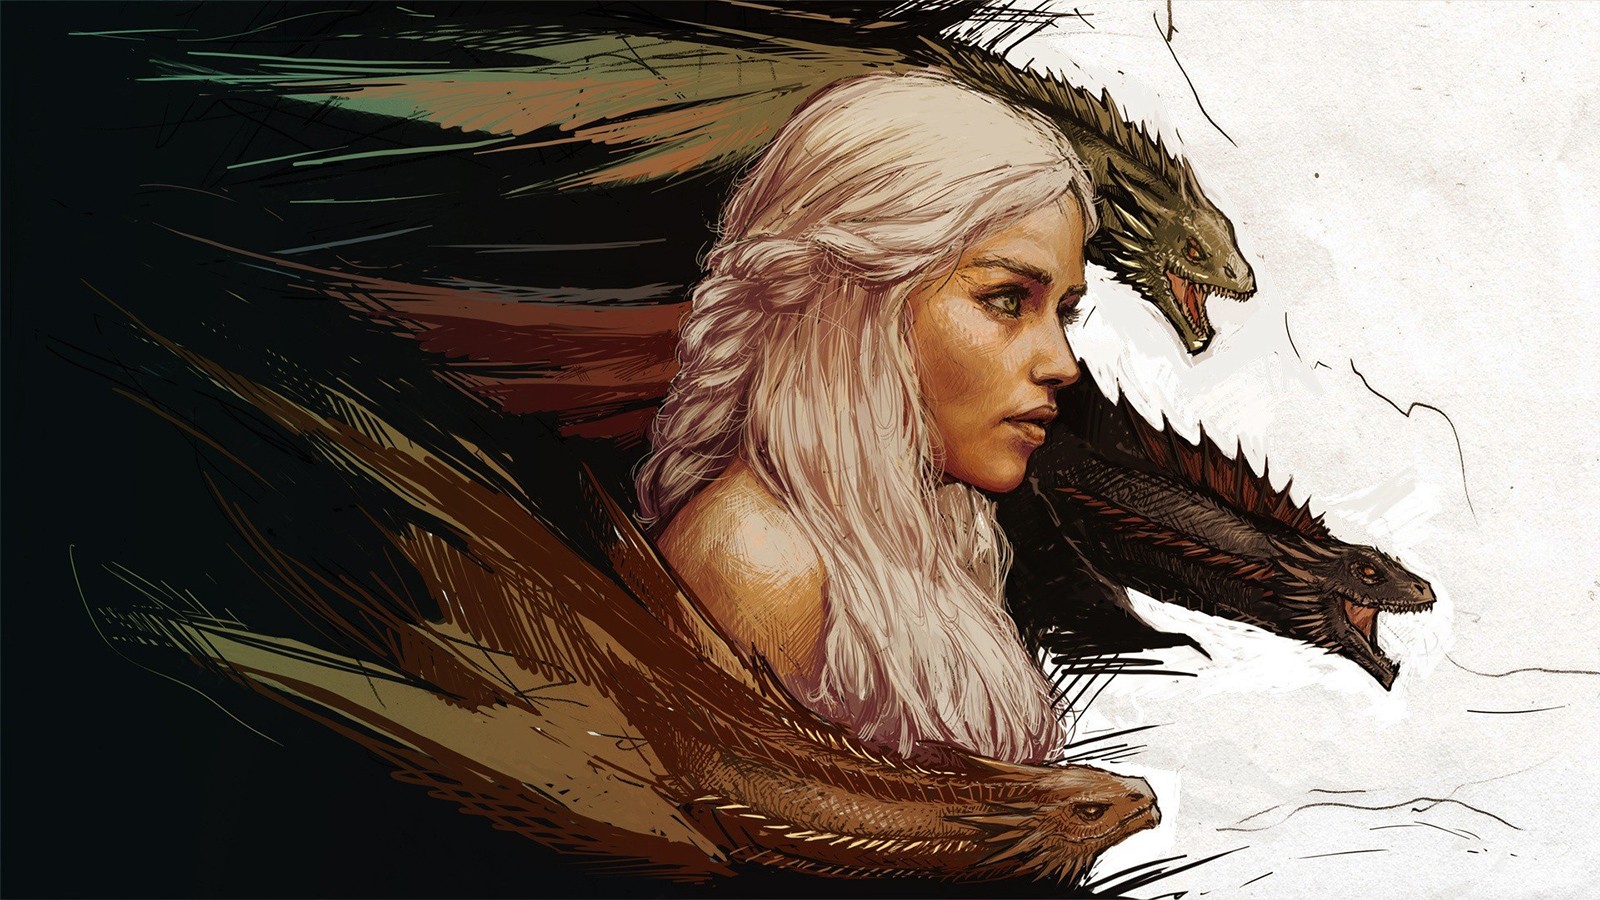 General 1600x900 Game of Thrones dragon Daenerys Targaryen Emilia Clarke fantasy art artwork fantasy girl women creature long hair TV series DeviantArt